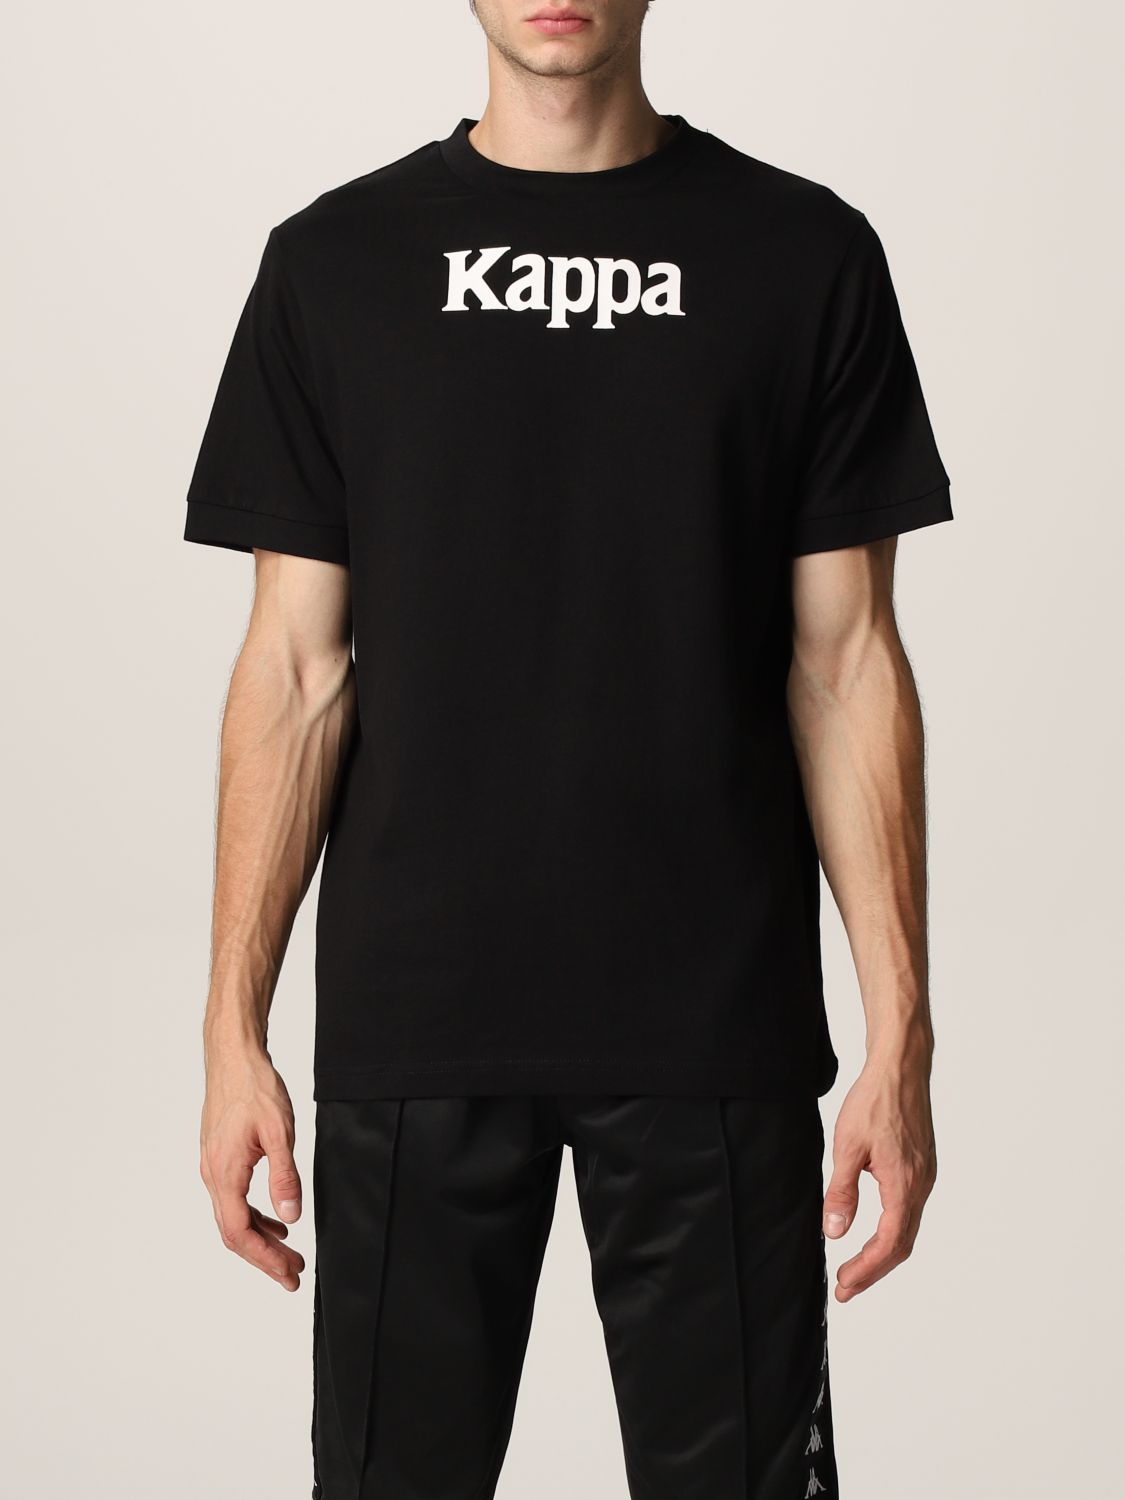 K-WAY @ KAPPA: T-shirt men | T-Shirt K-Way @ Kappa Black T-Shirt K-Way @ Kappa 31119PW GIGLIO.COM